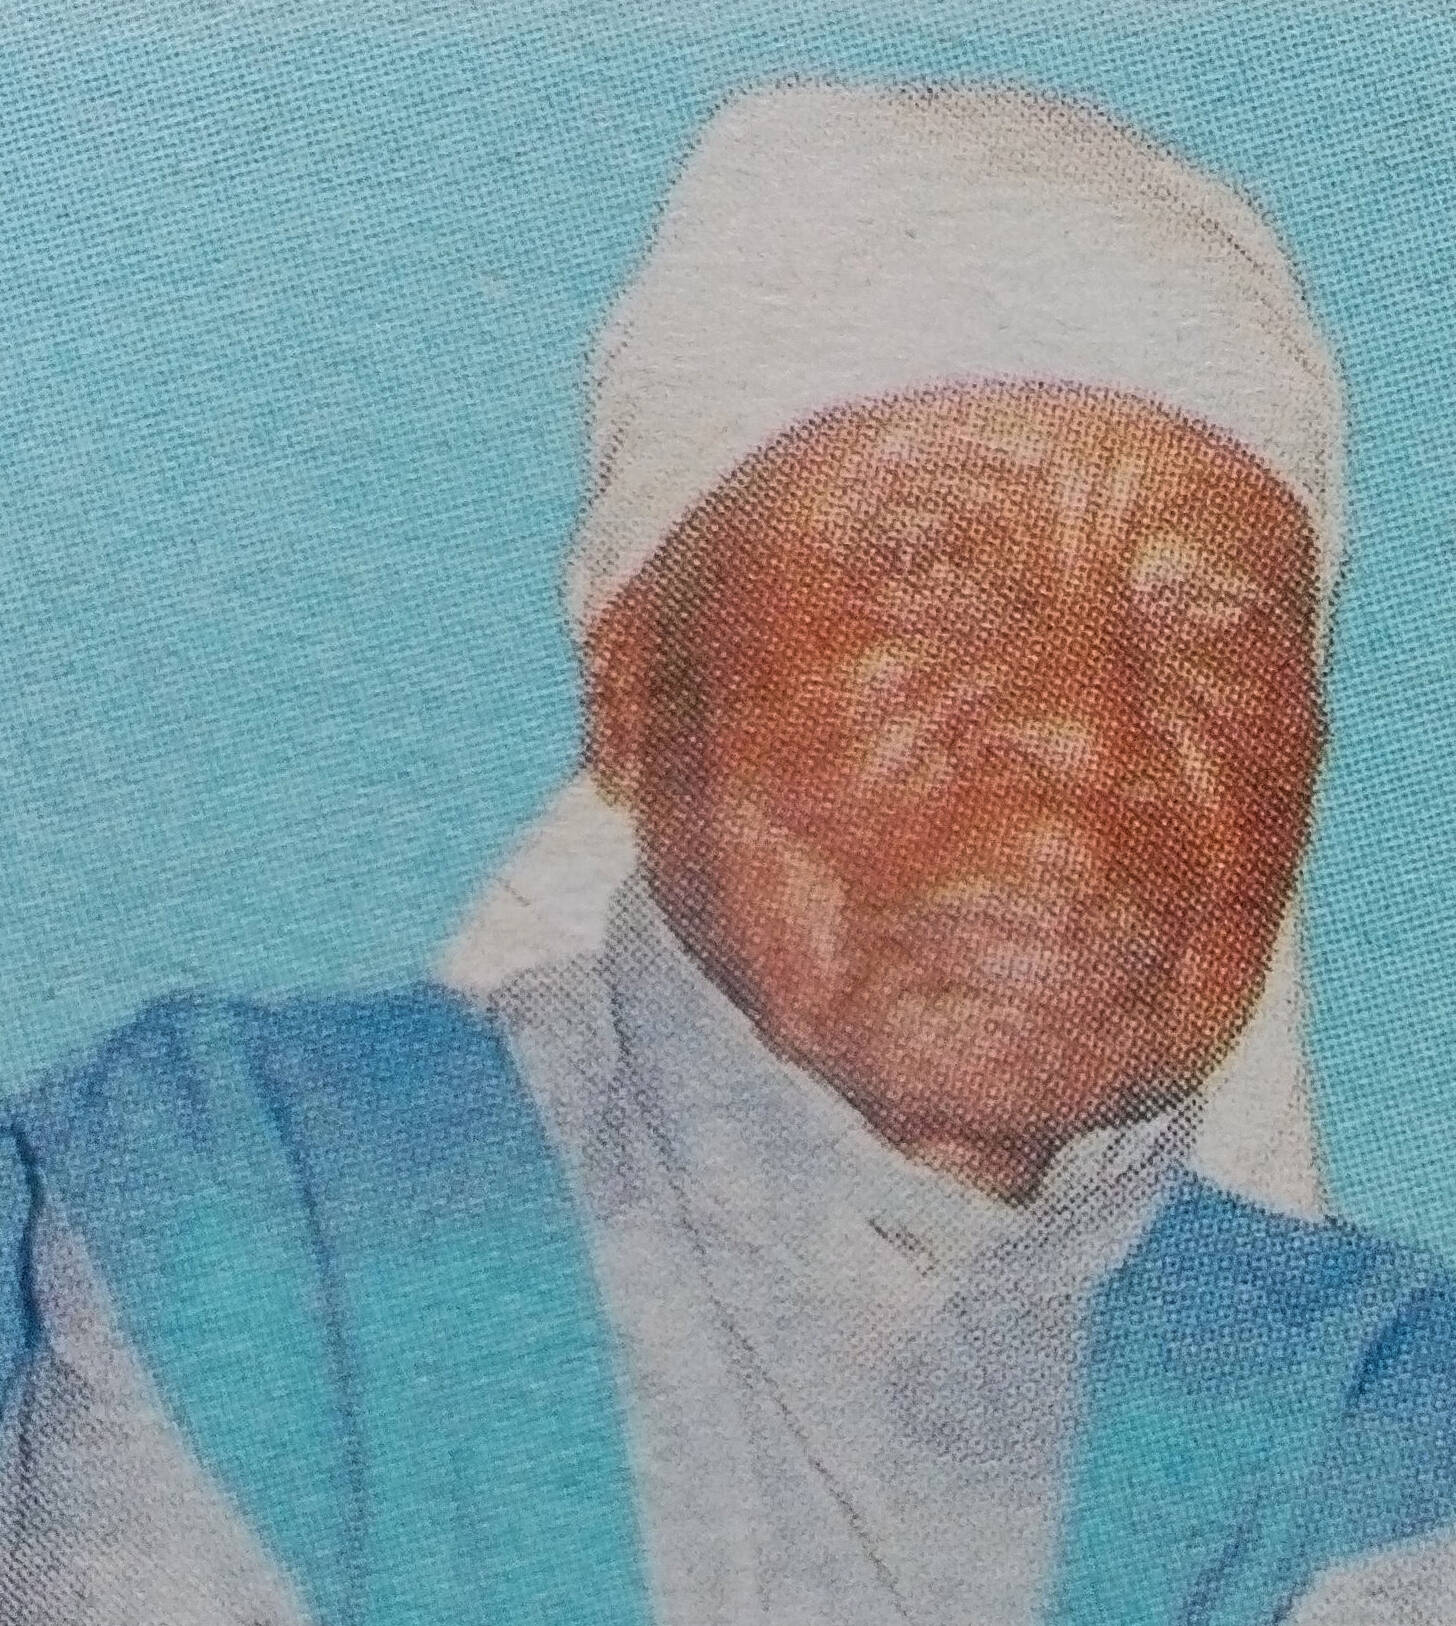 Obituary Image of L/IJoyce Ingati Ambe(Womumbita) Sunrise 1917 - Sunset 19/04/2017